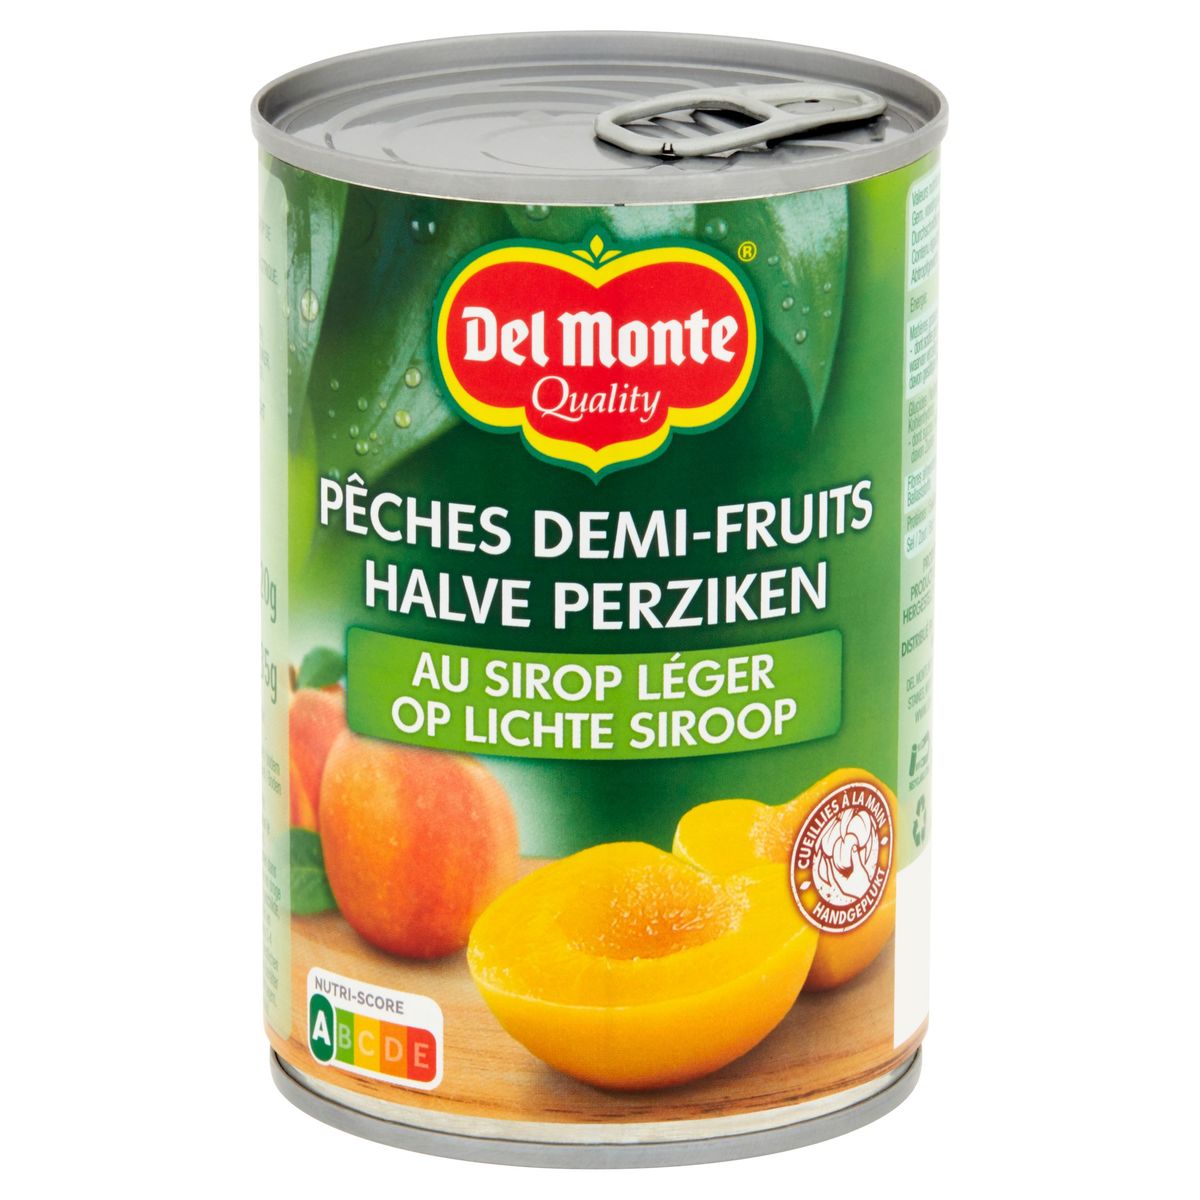 Del Monte Halve Perziken op Lichte Siroop 420 g